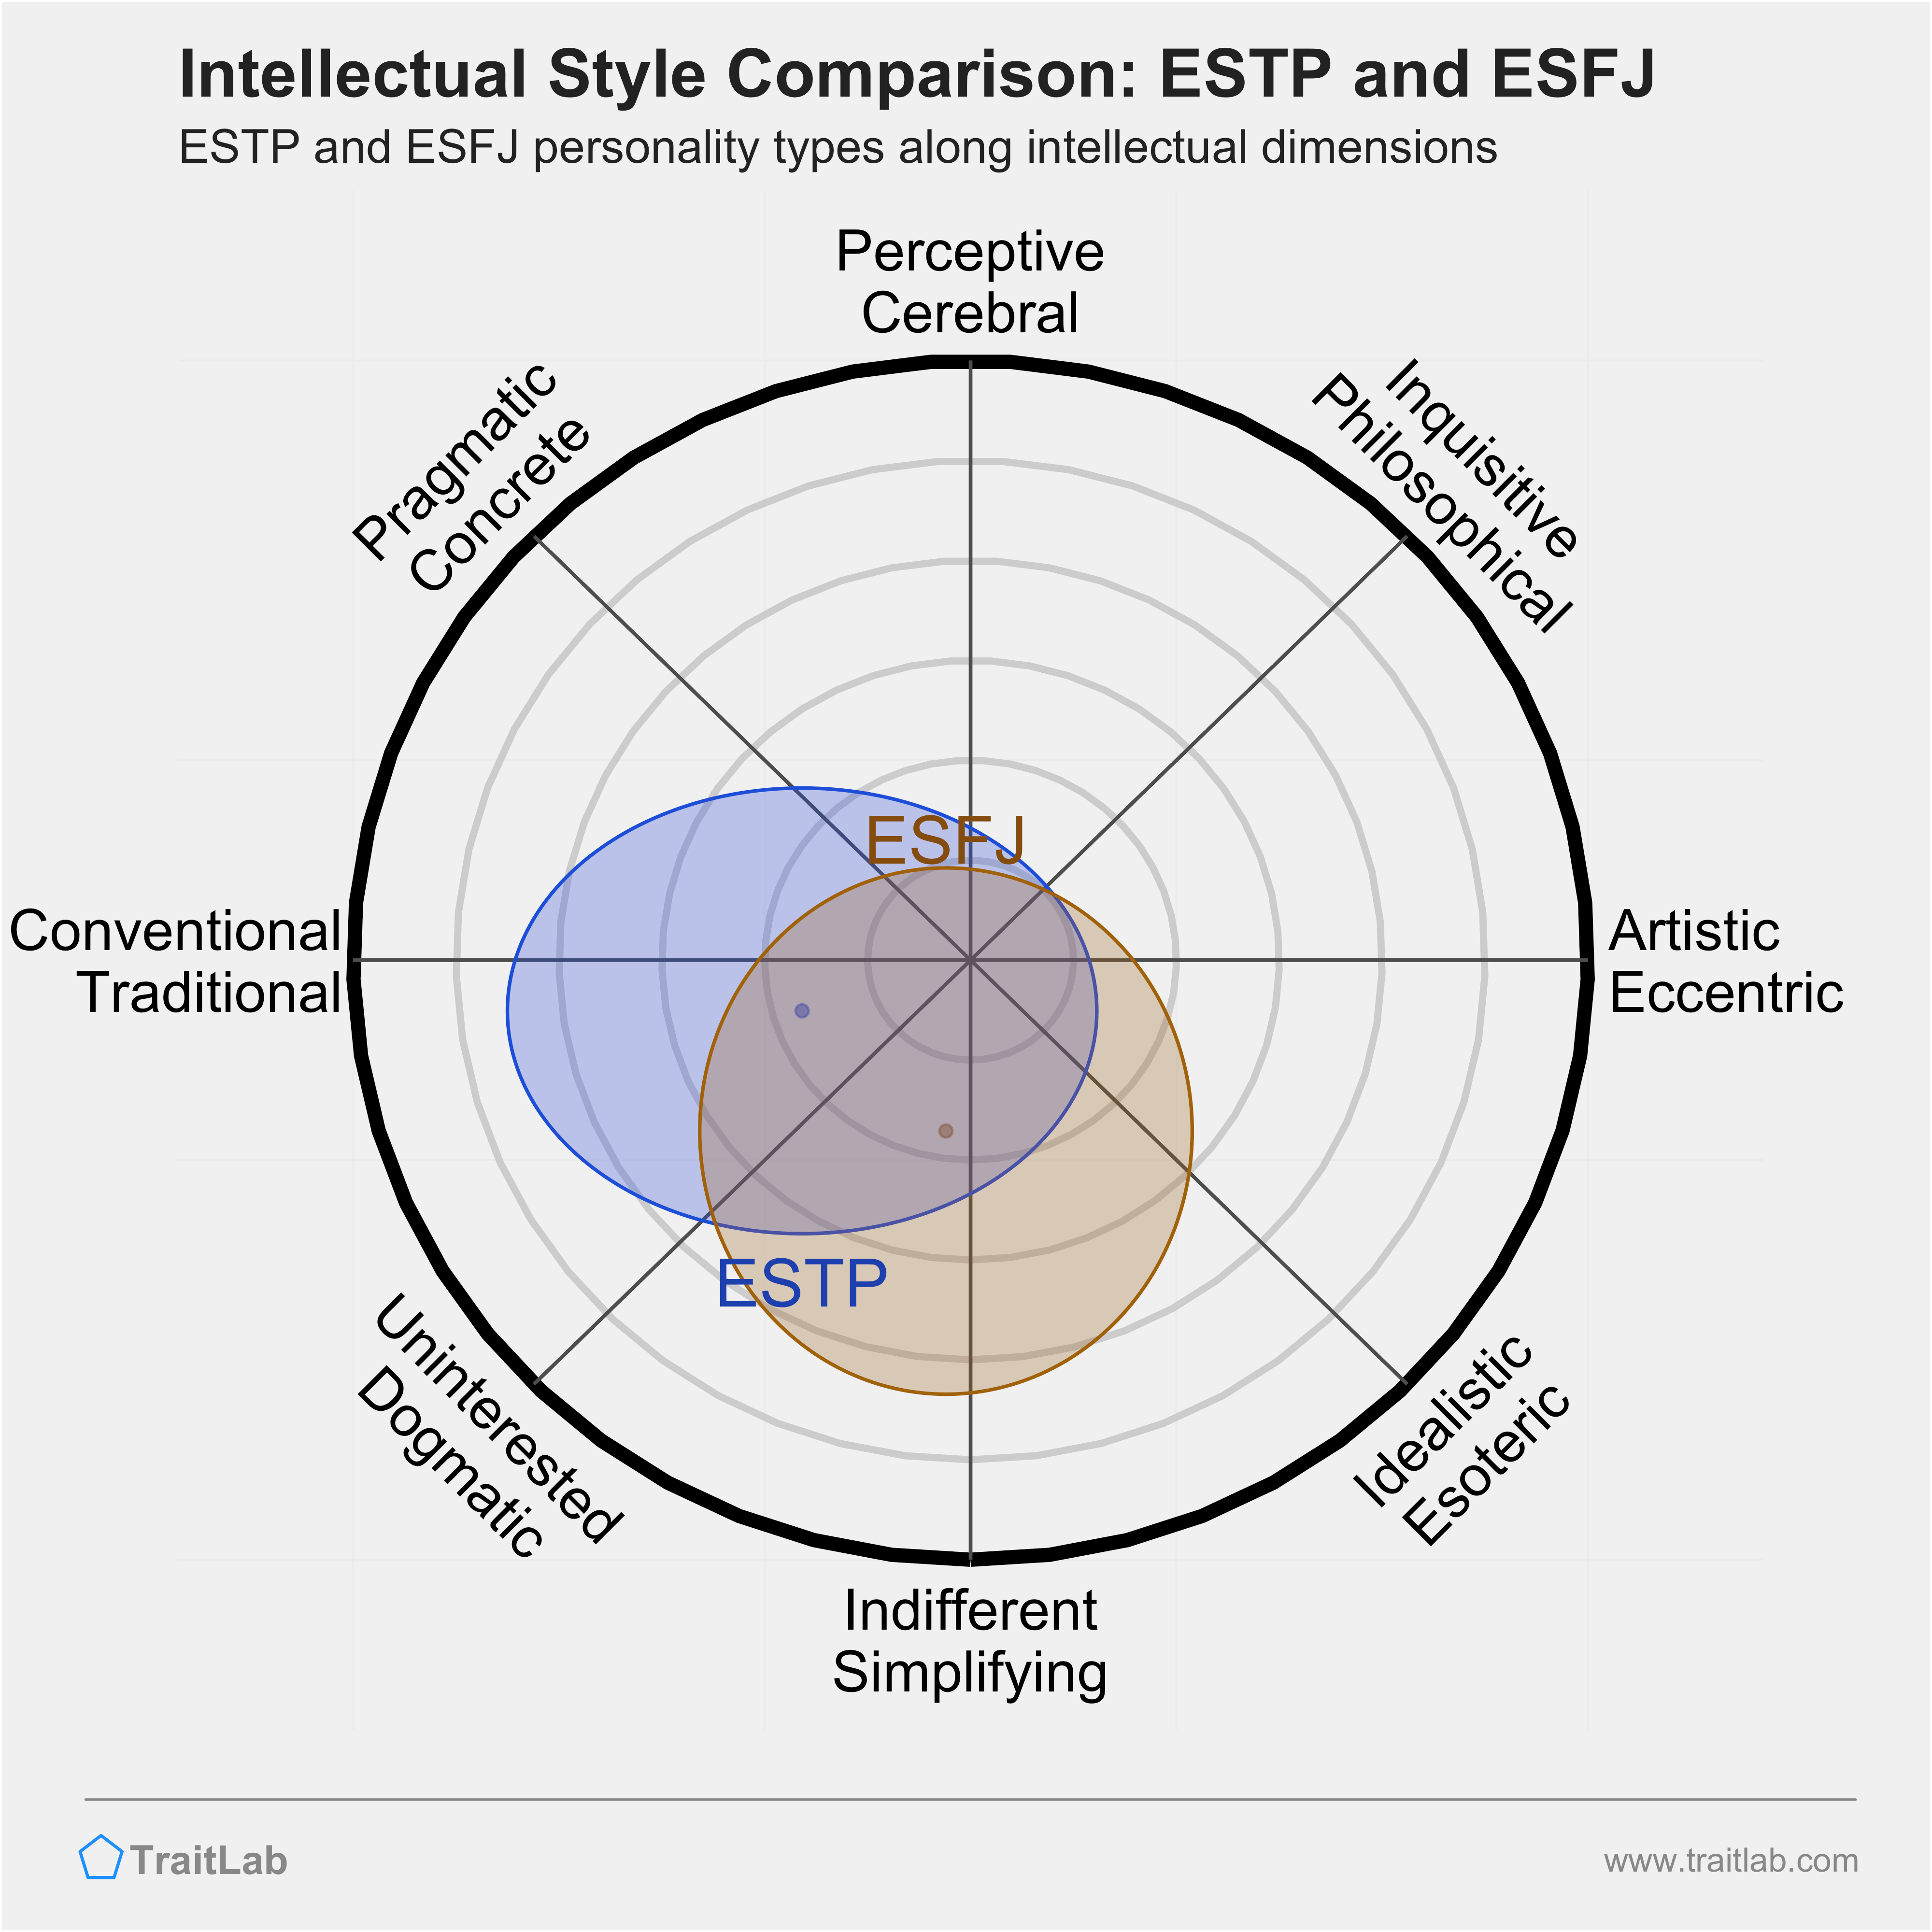 ESTP and ESFJ comparison across intellectual dimensions